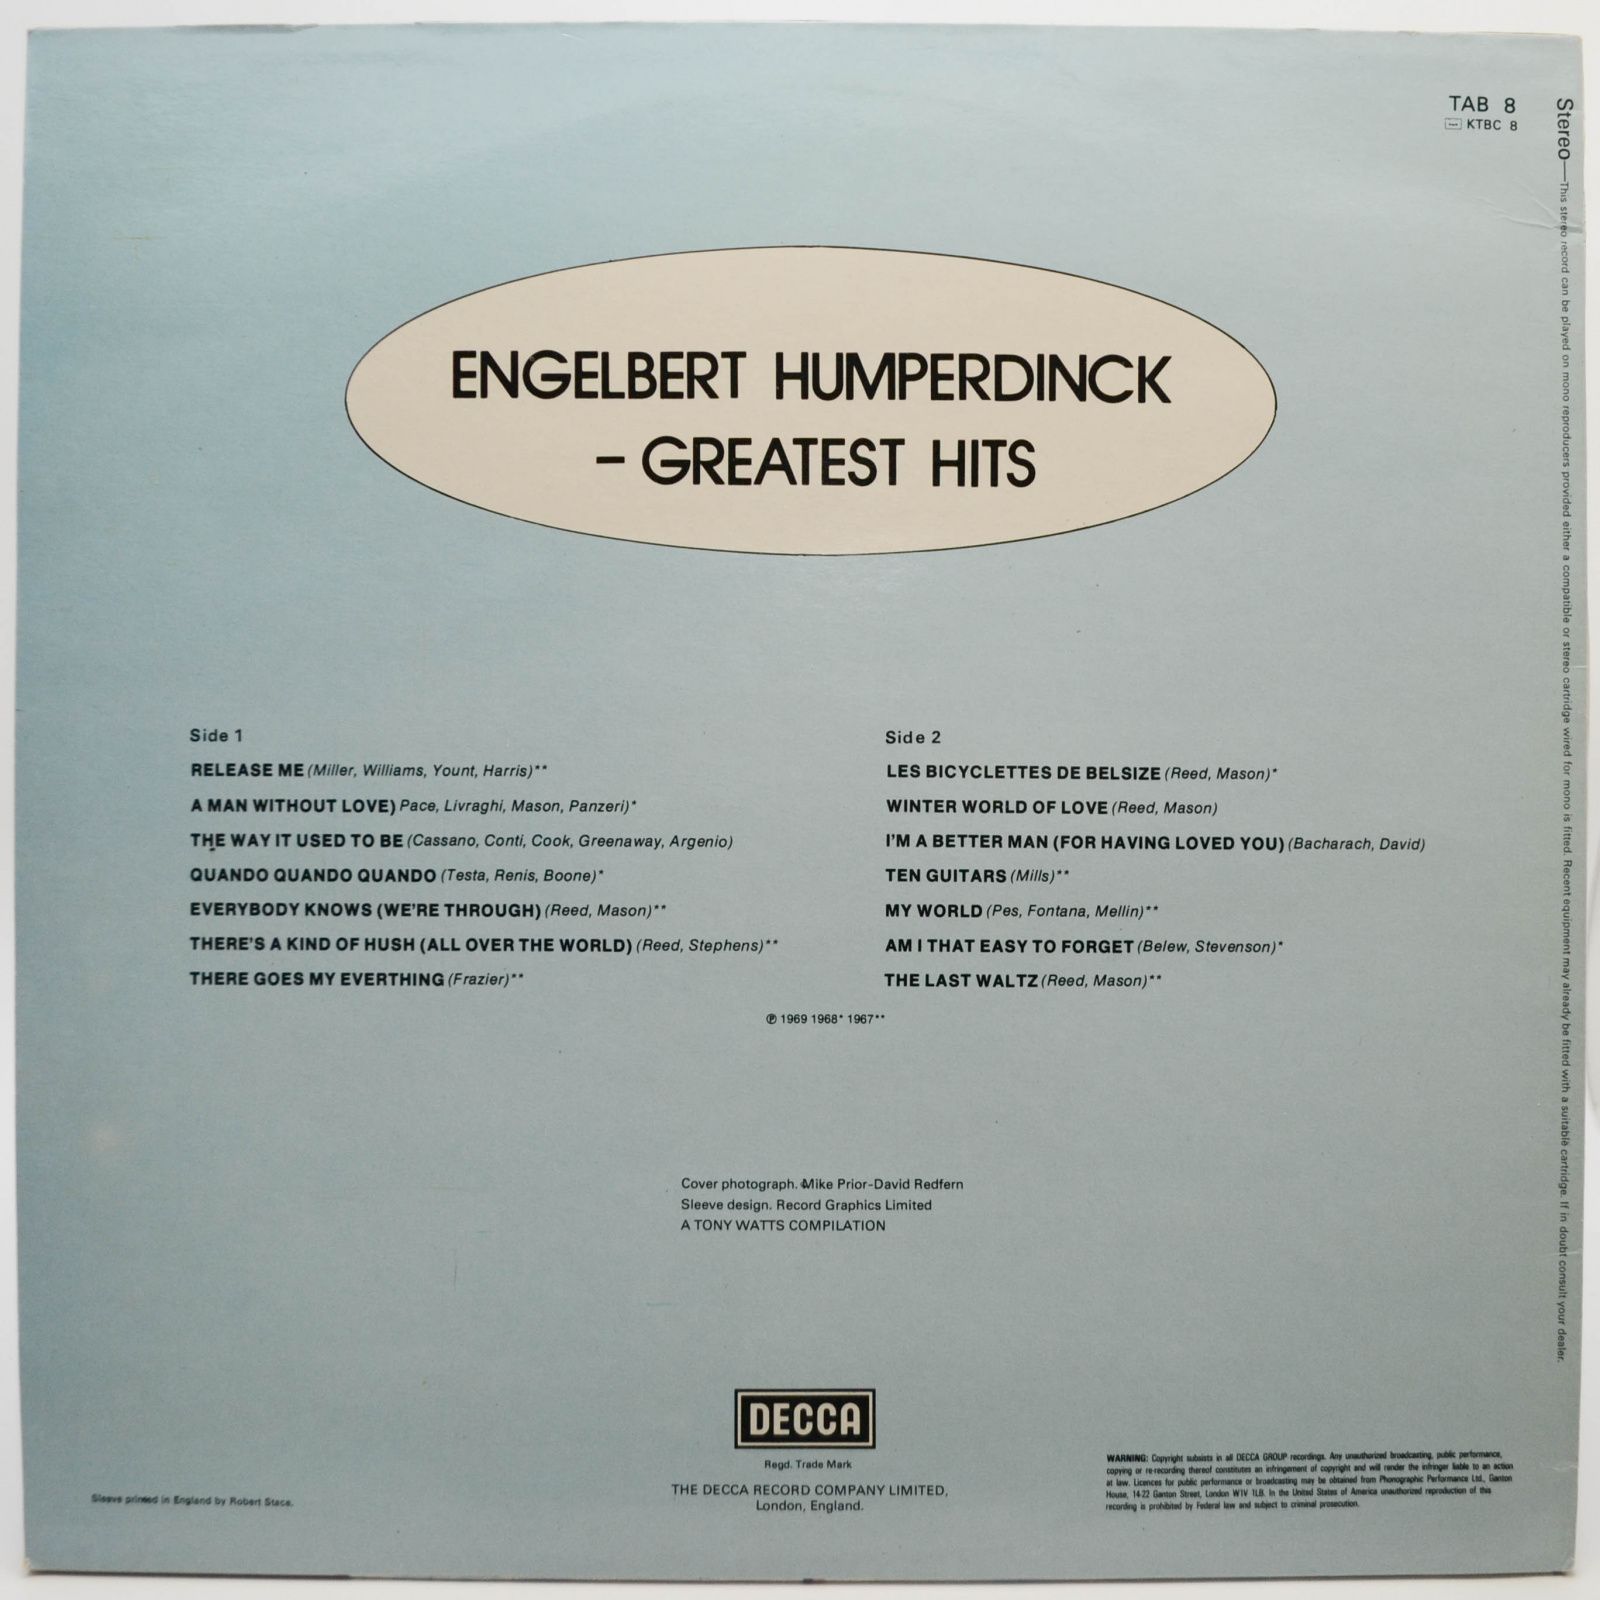 Engelbert Humperdinck — Engelbert Humperdinck's Greatest Hits (UK), 1969